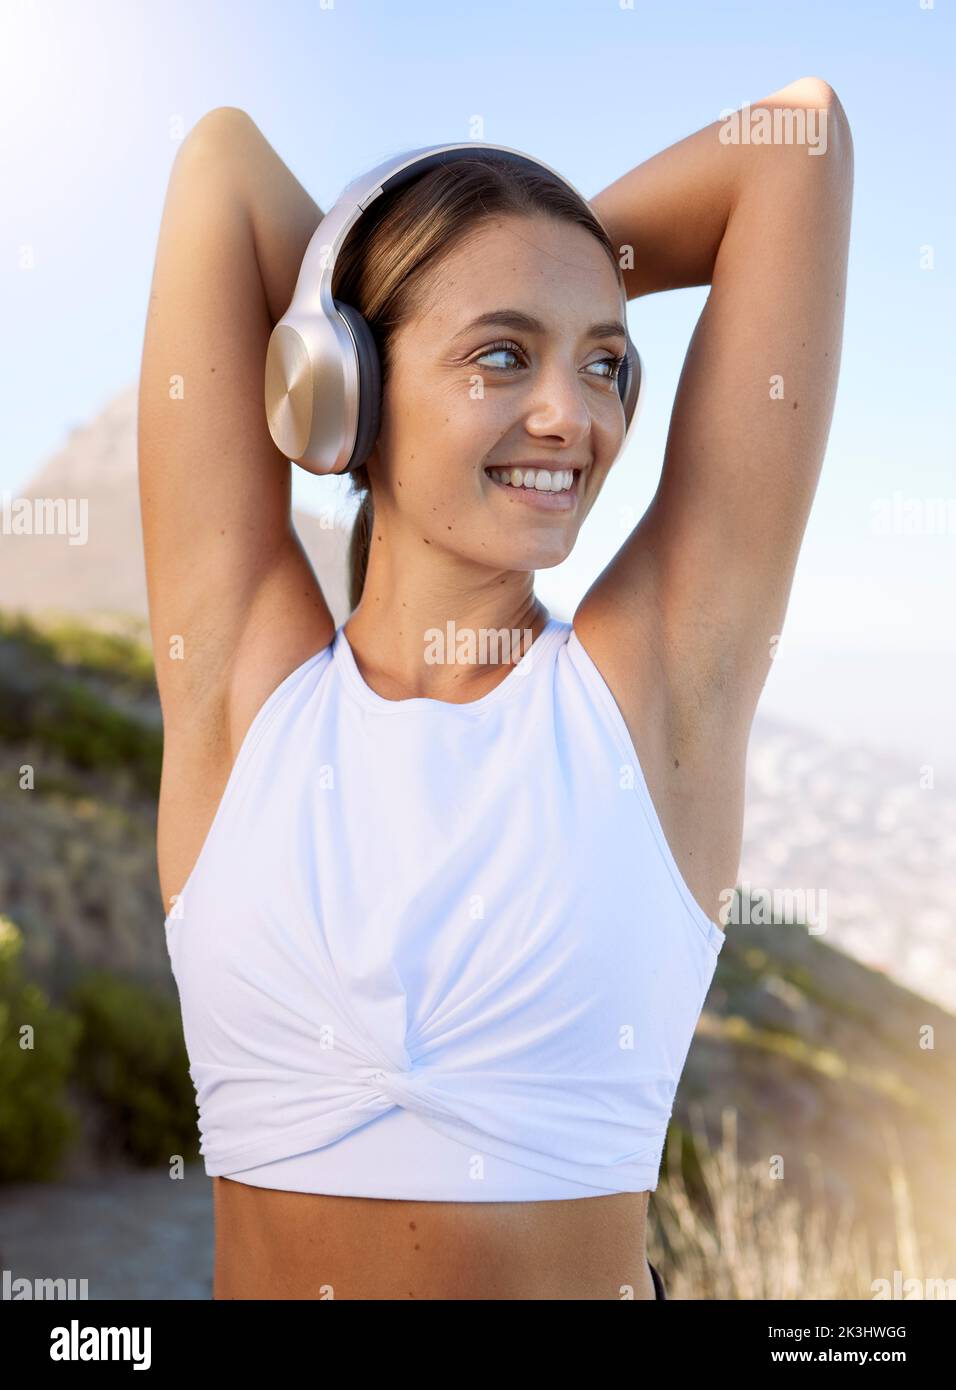 Caucasian woman in sports-bra outdoors Stock Photo - Alamy